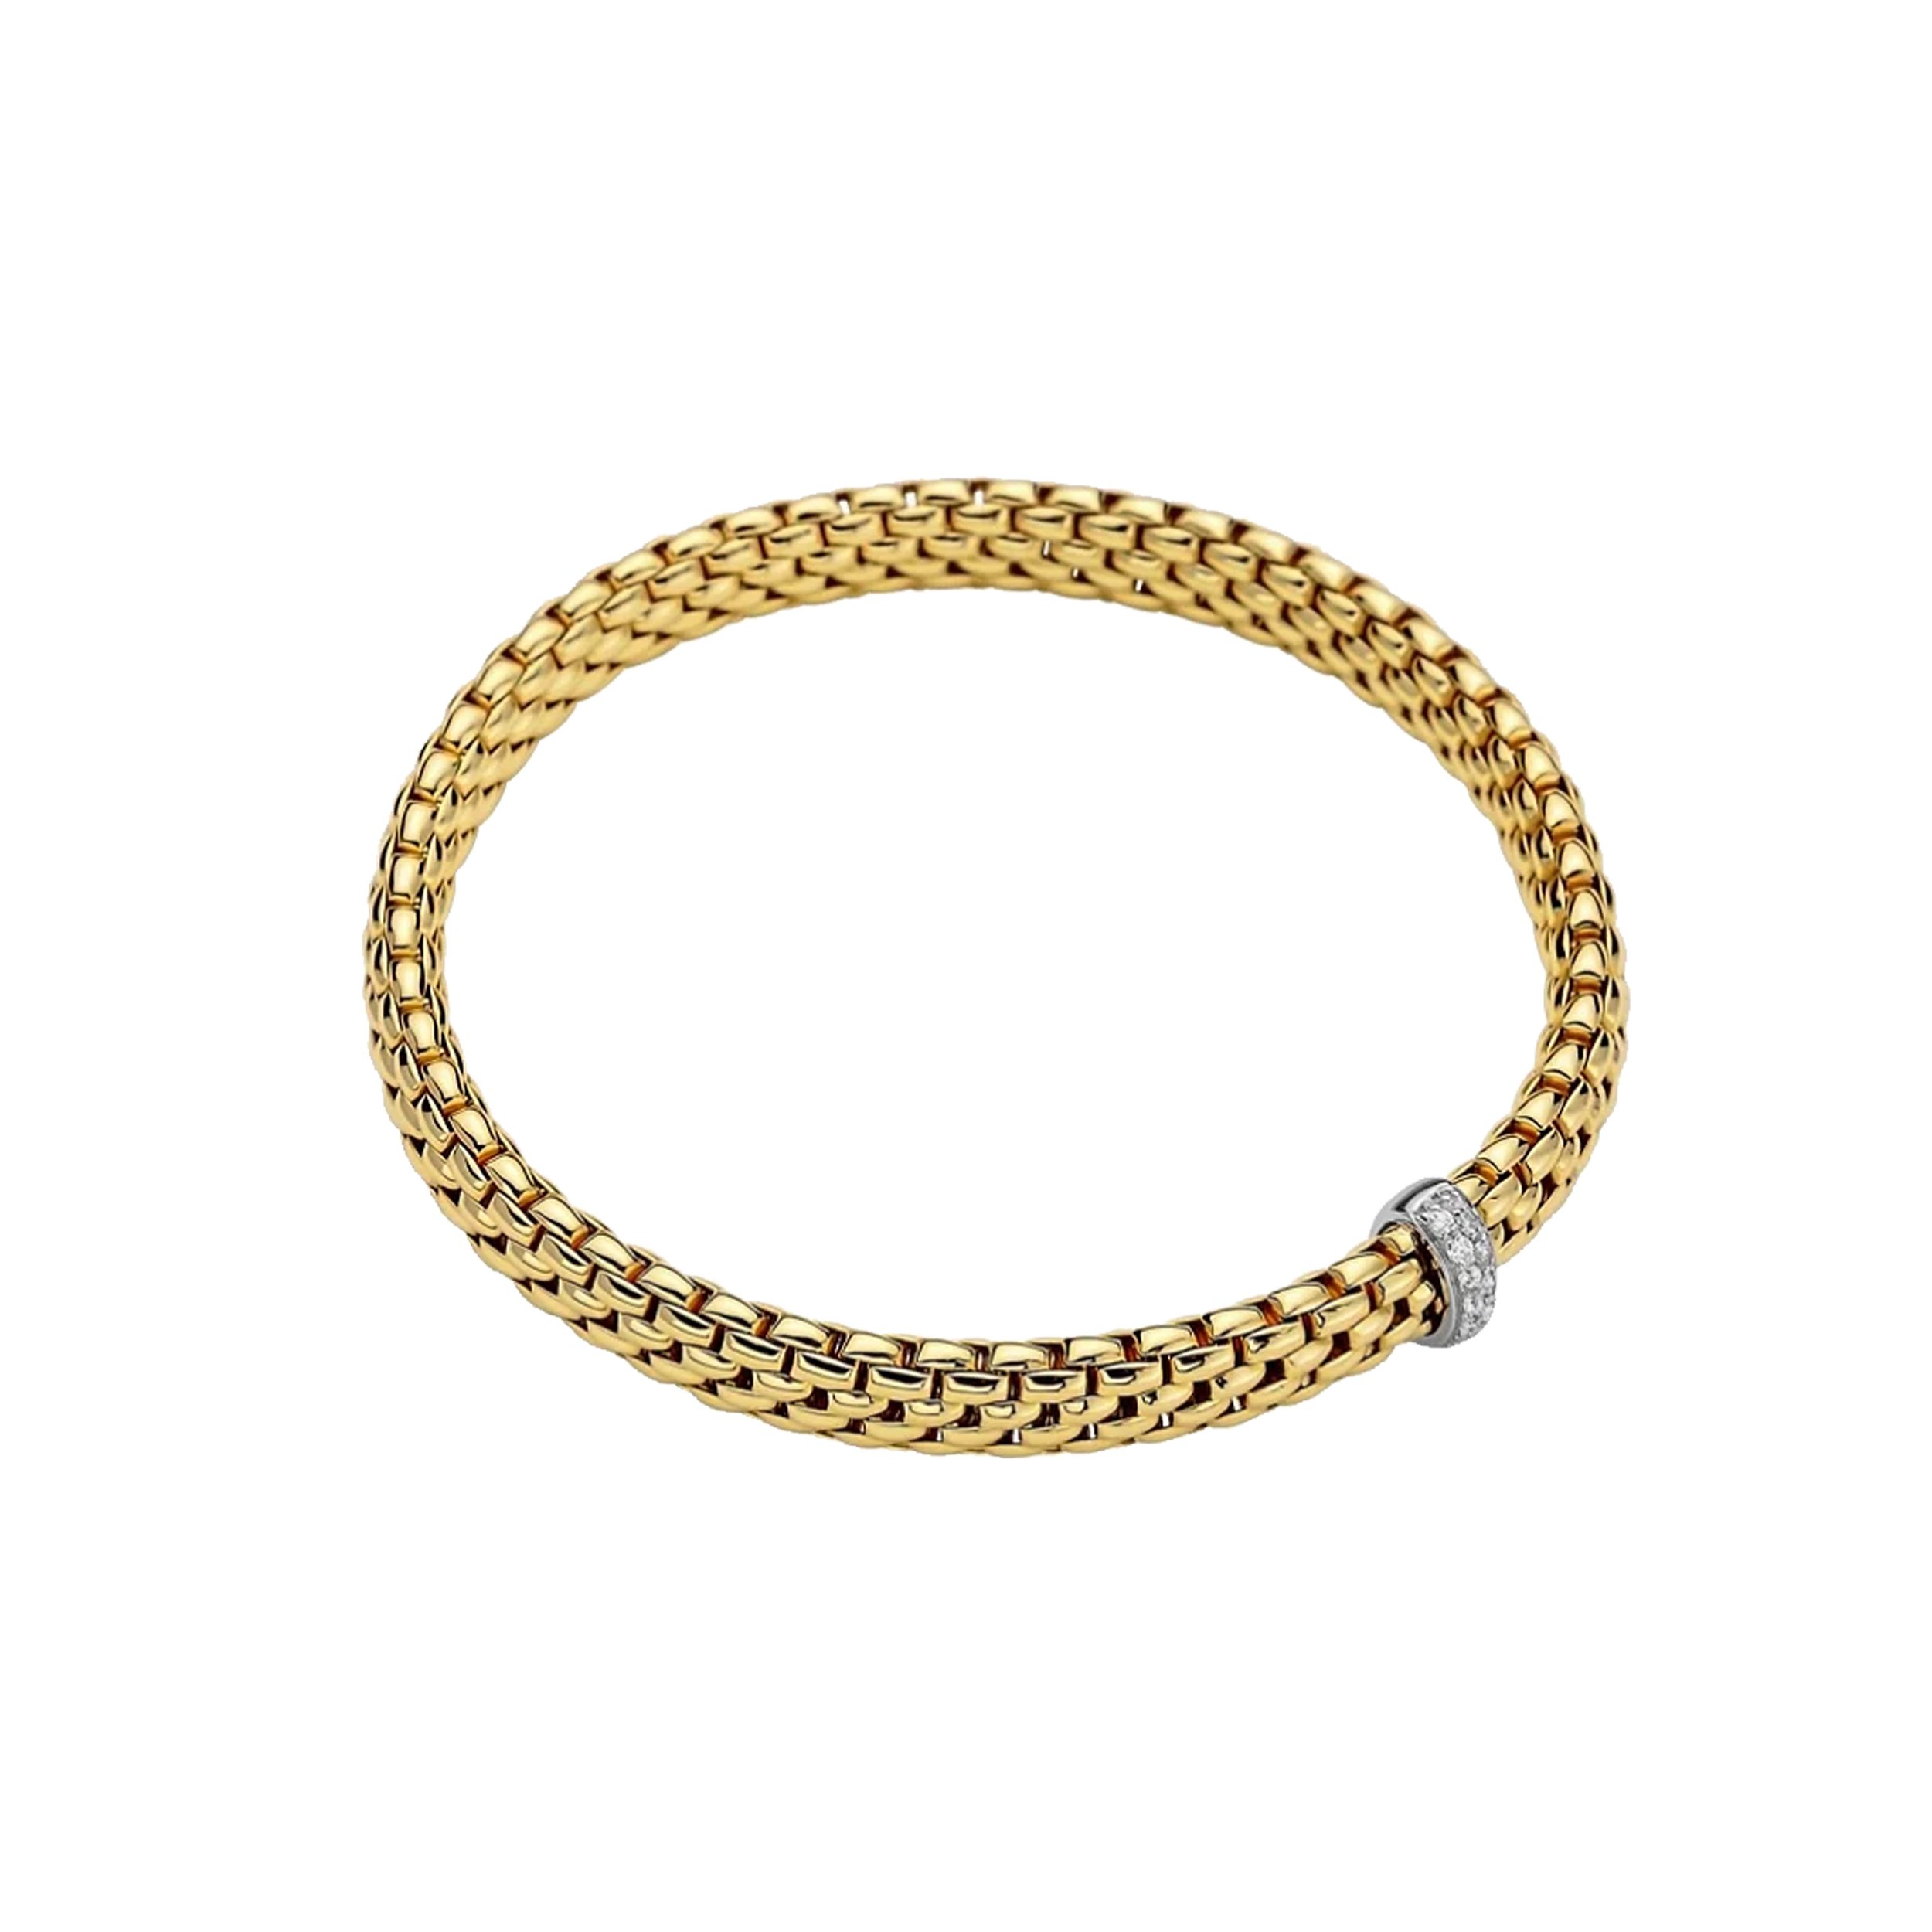 18k Gold Flex'it Bracelet in Yellow Gold with Diamonds size S (16 cm)